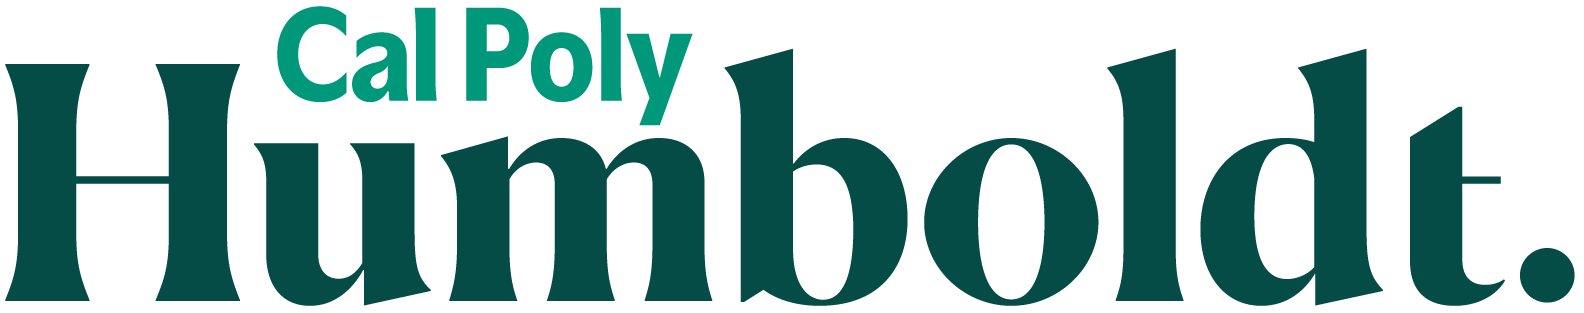 HUMBOLDT logo